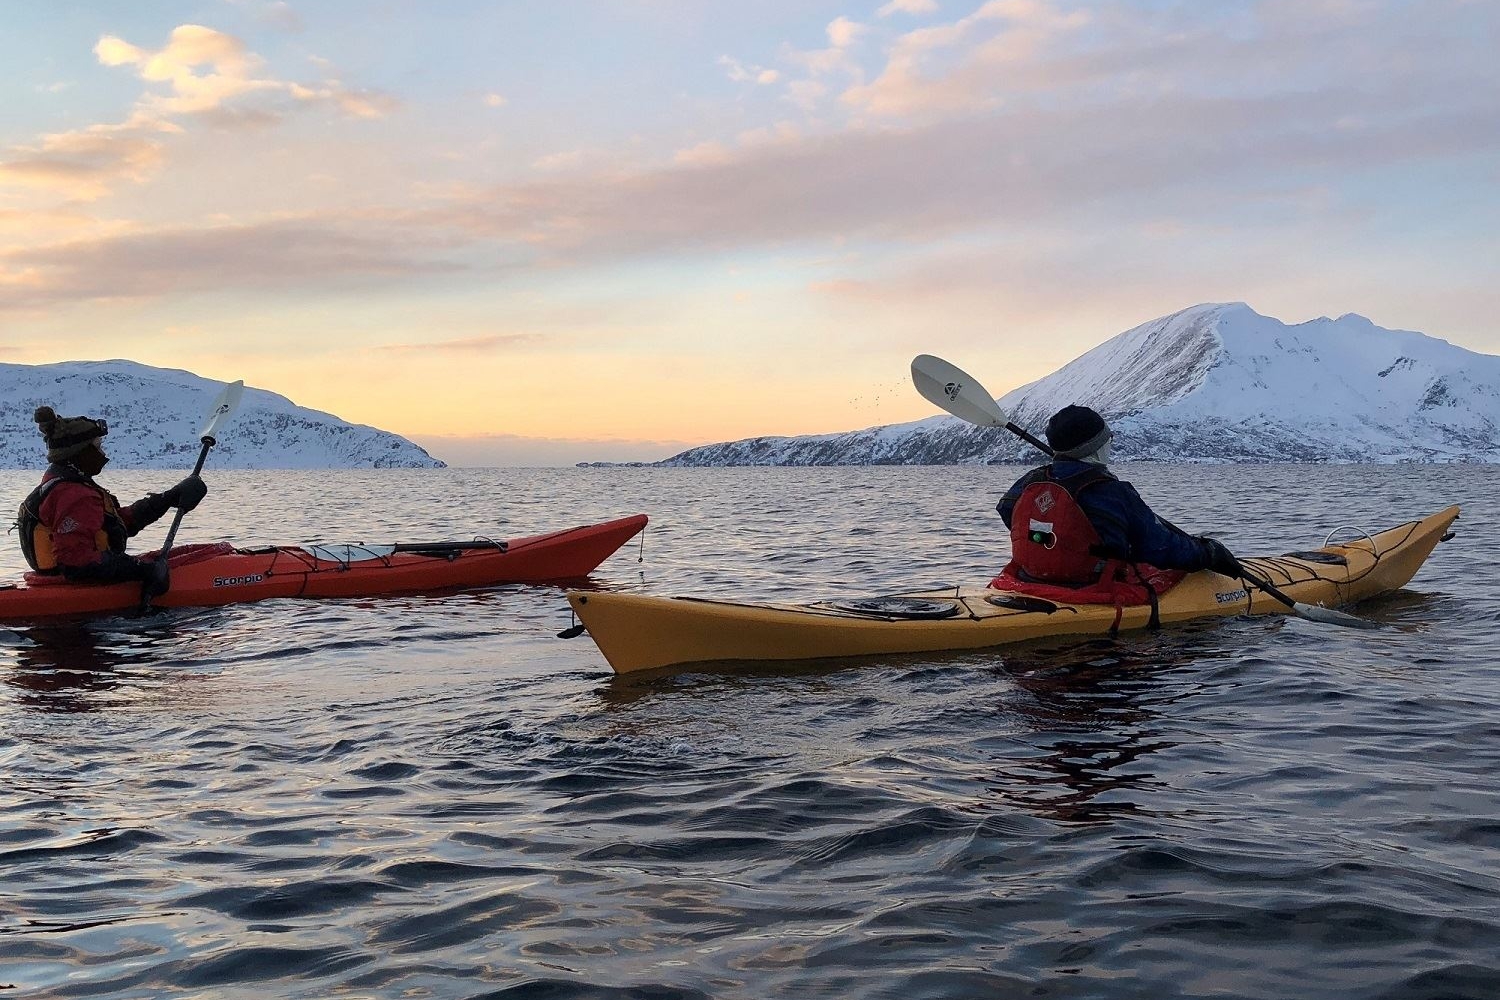 Two people kayaking in winter landscape